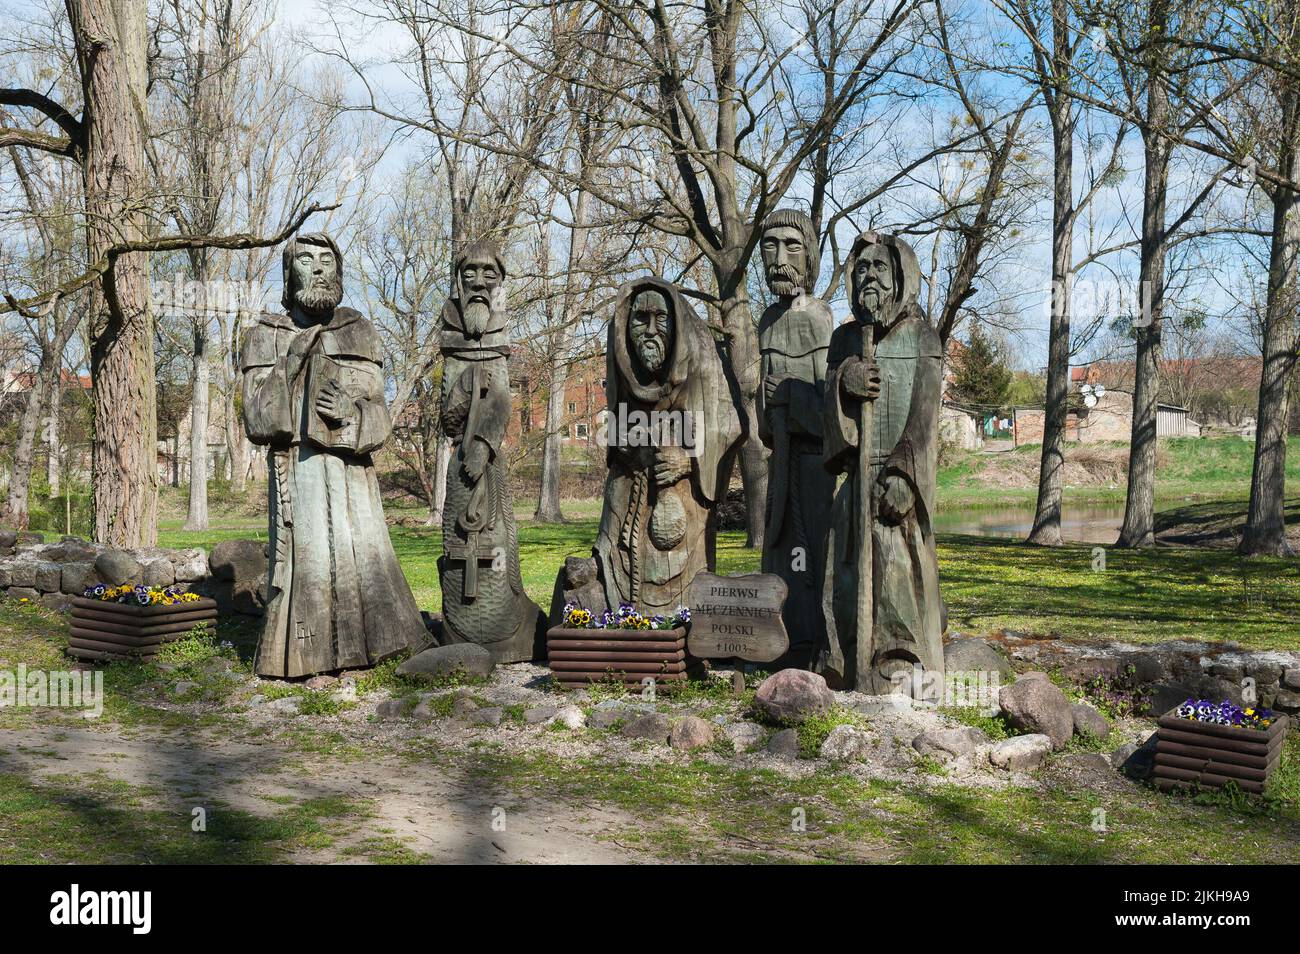 Wooden sculpture 'the first martyrs of Poland' in Miedzyrzecz, Lubusz Voivodeship, Poland Stock Photo